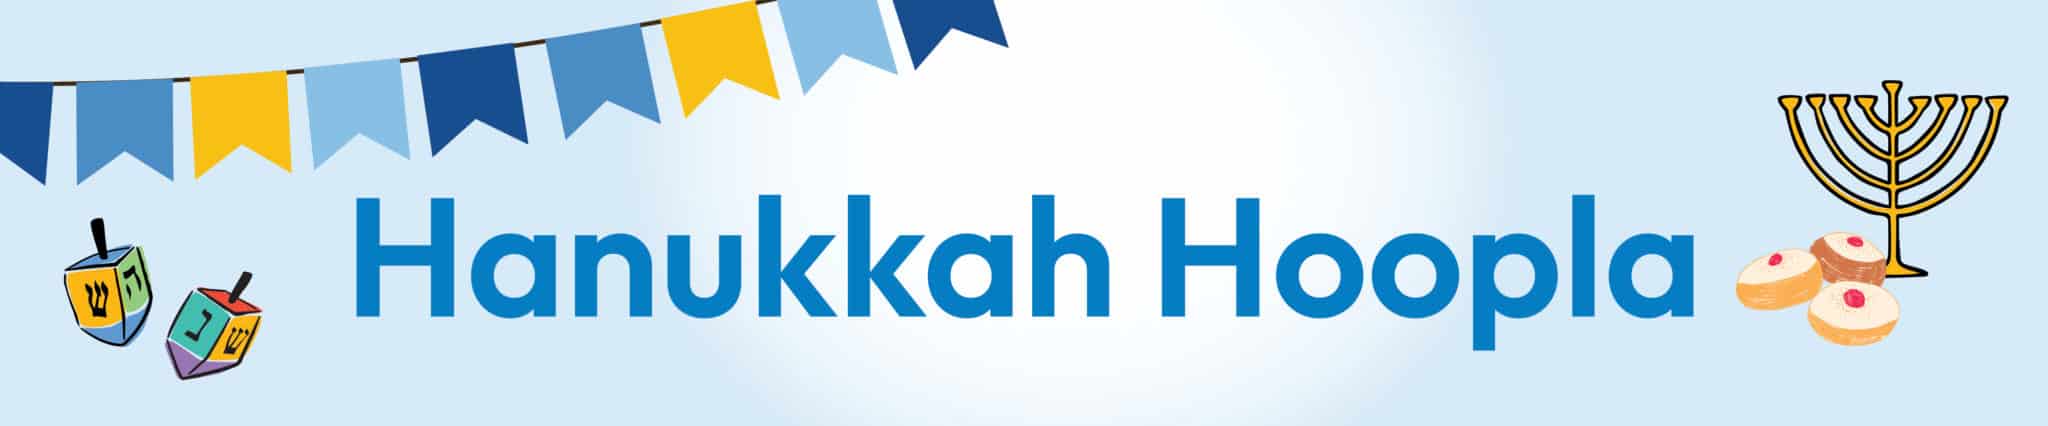 Hanukkah Hoopla Banner